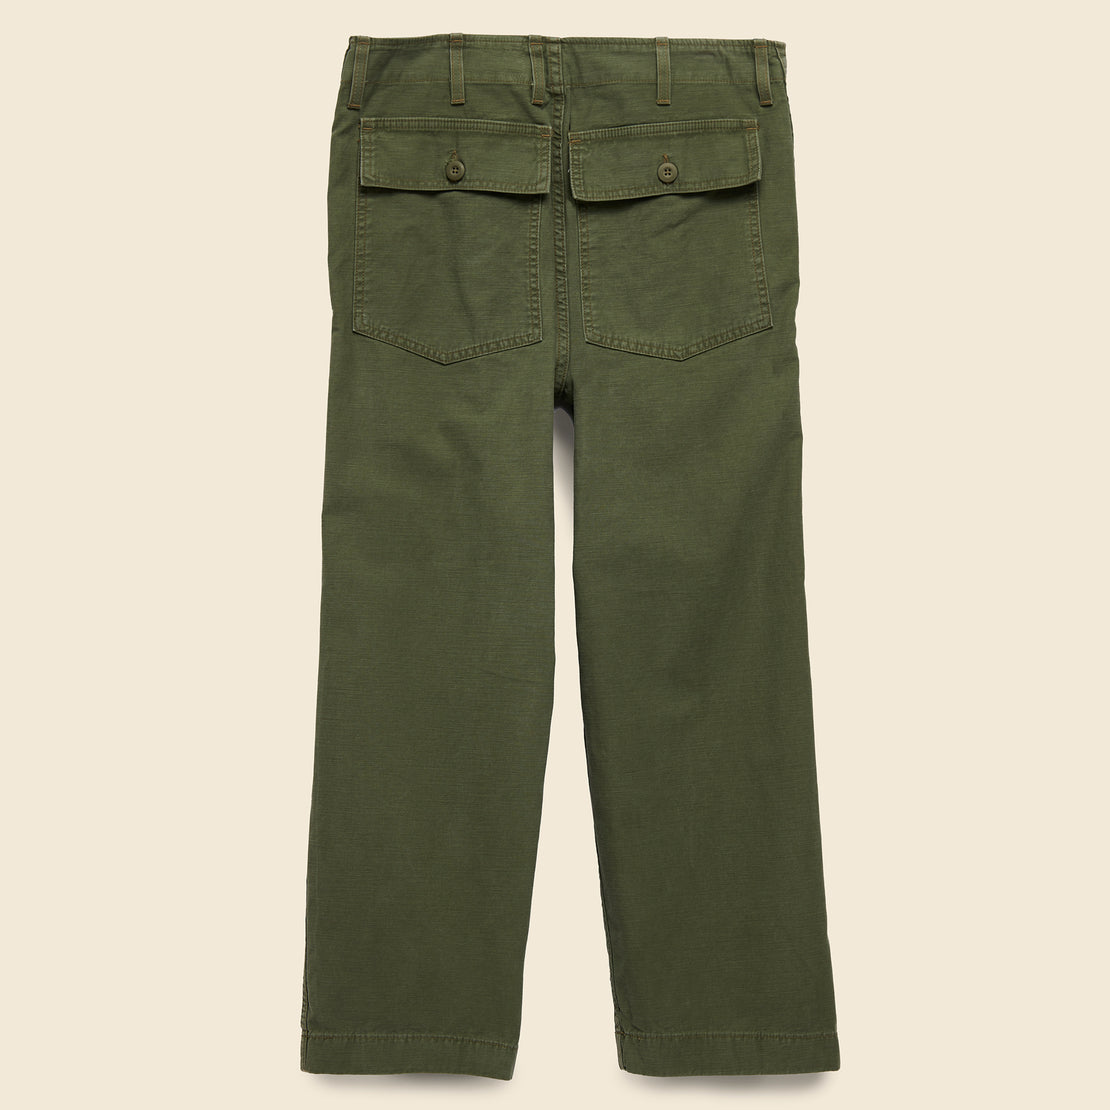 Blake Military Trouser - Fatigue Green